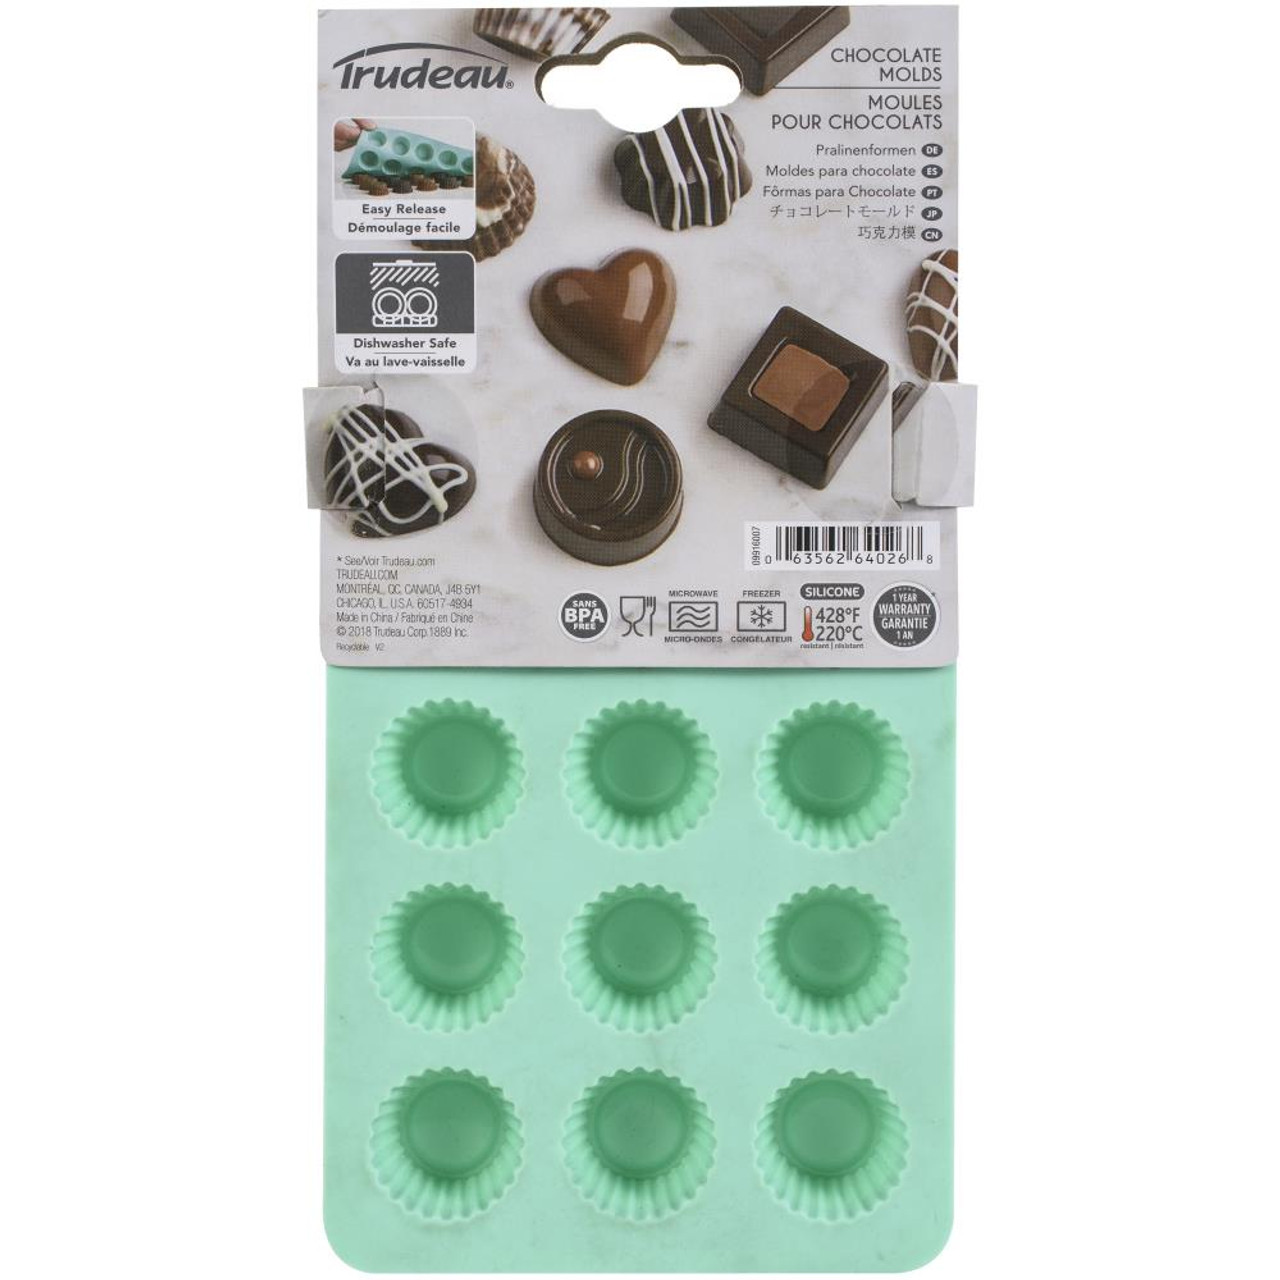 Trudeau Dinosaur Silicone Chocolate Candy Molds 2/Pkg